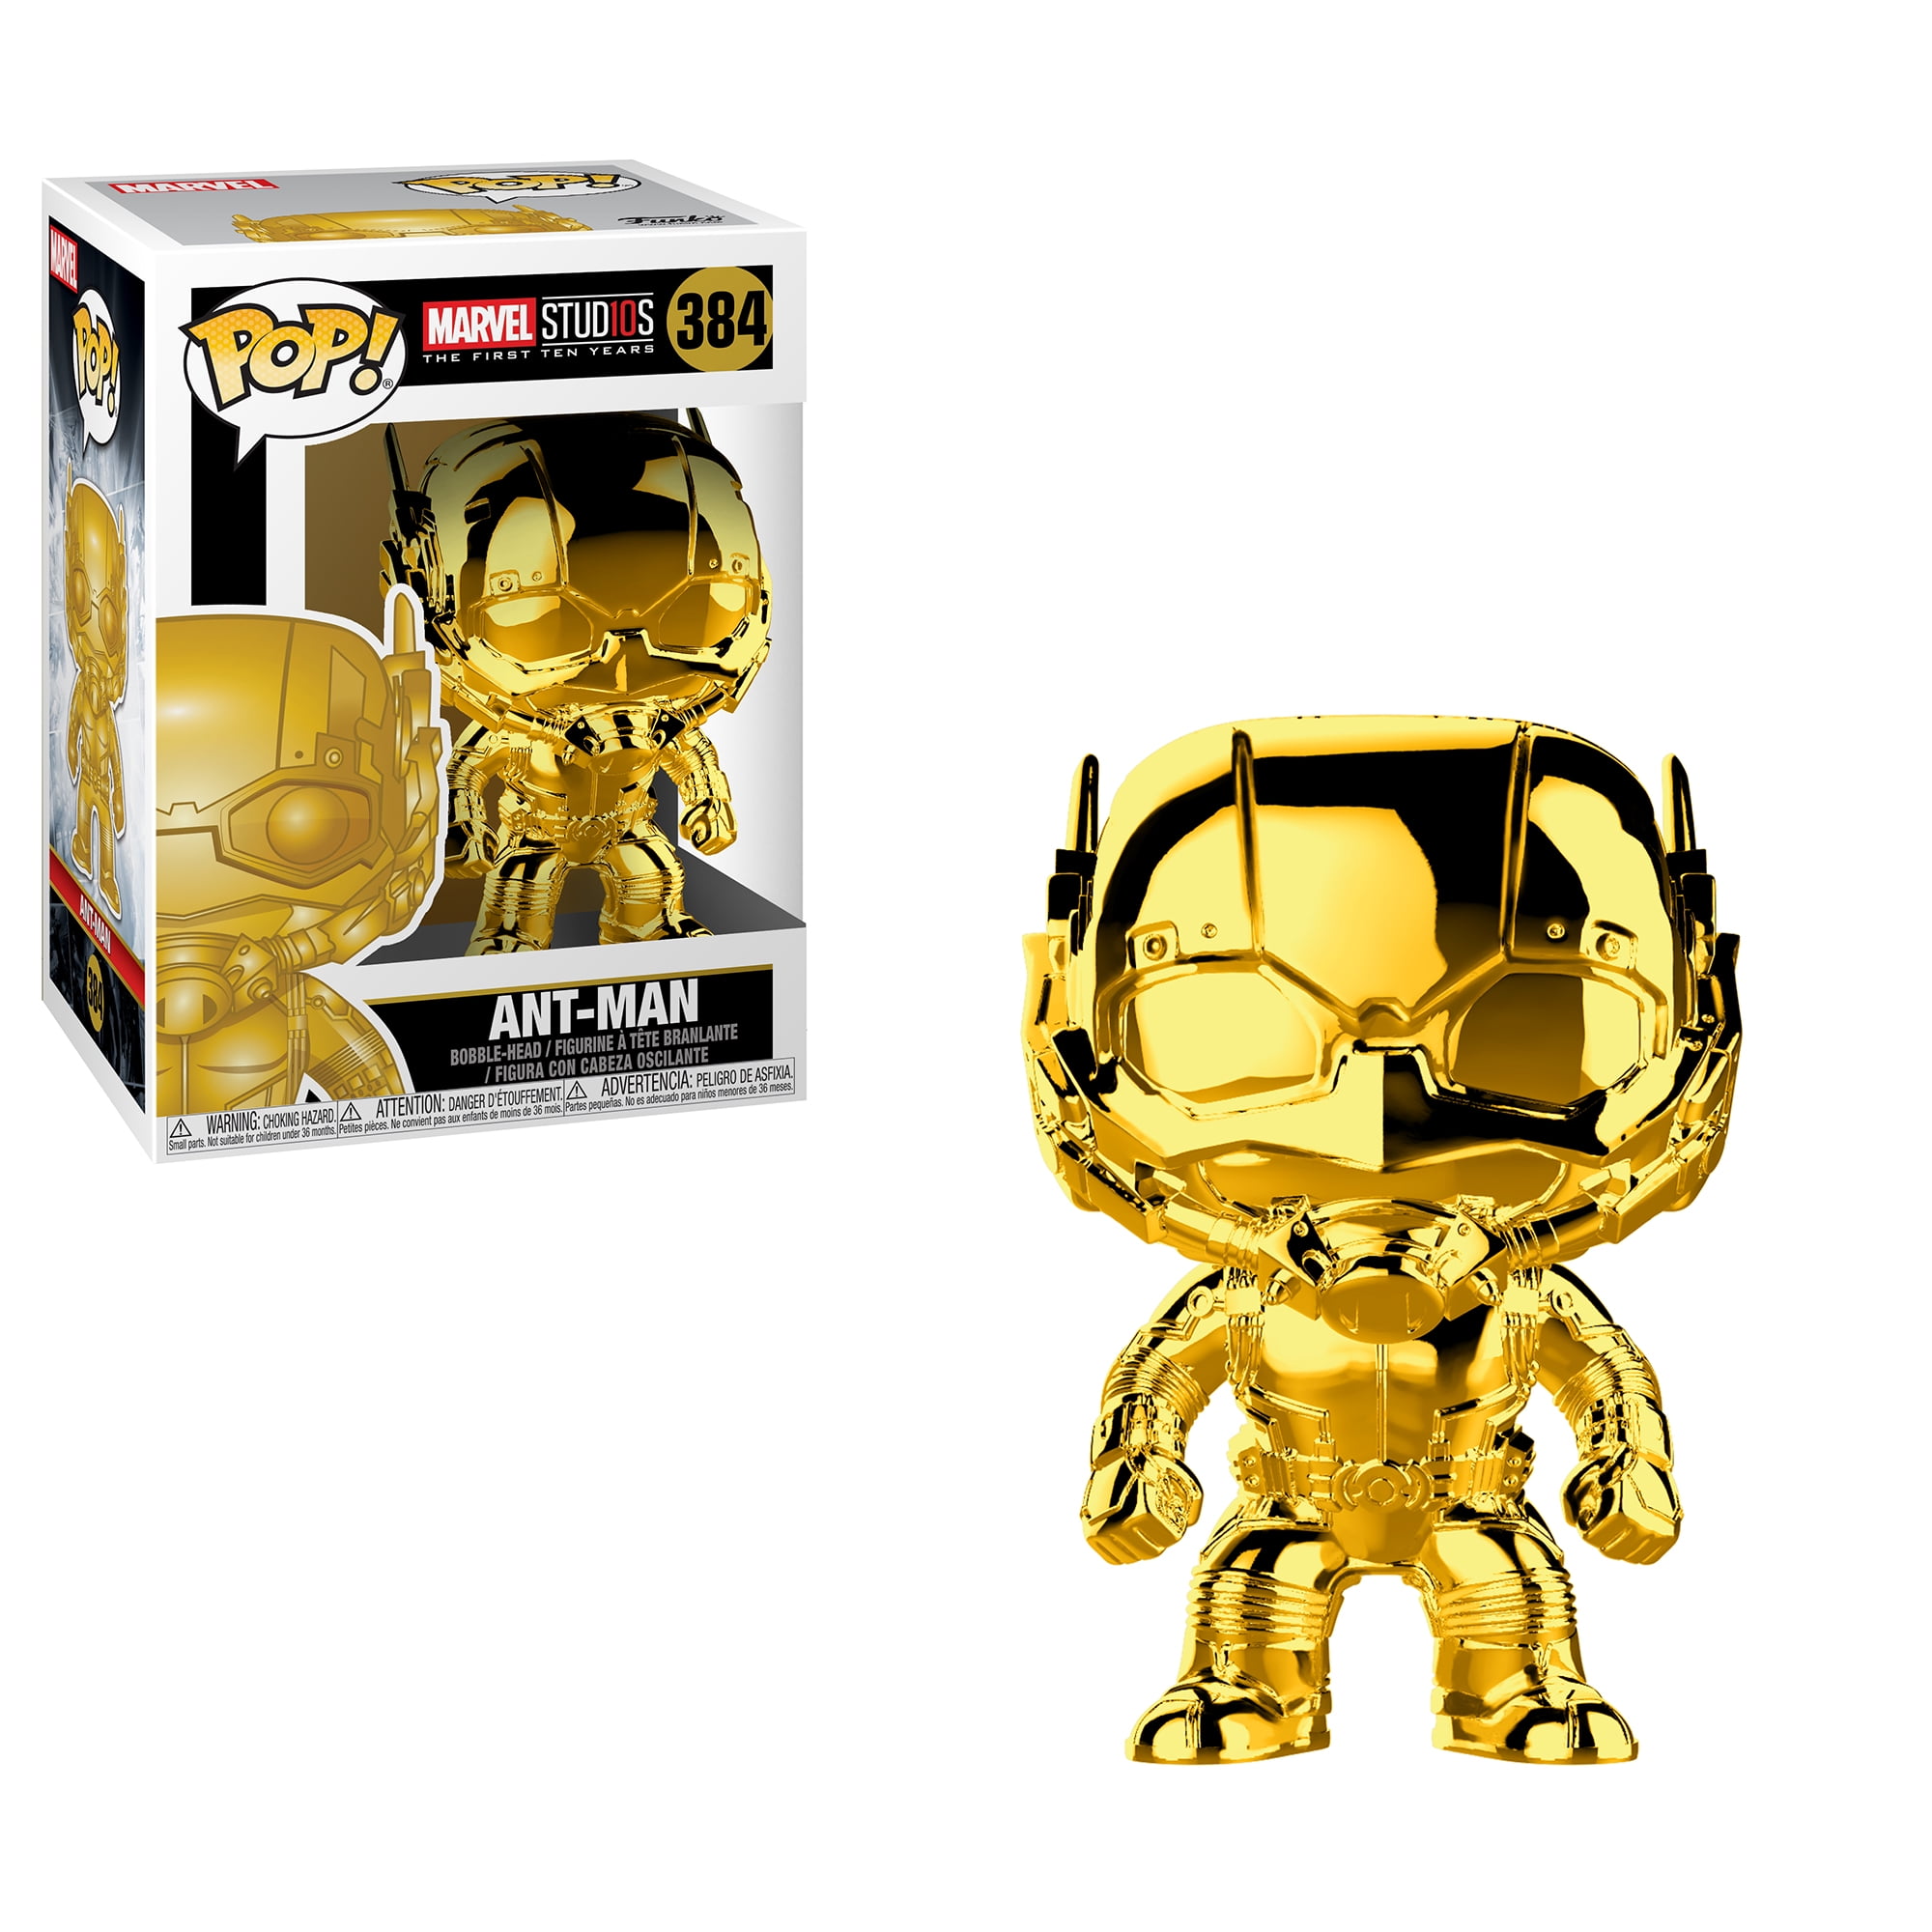 Marvel Studios 10th Anniversary Ant-man Gold Chrome Pop Vinyl Figure Funko for sale online